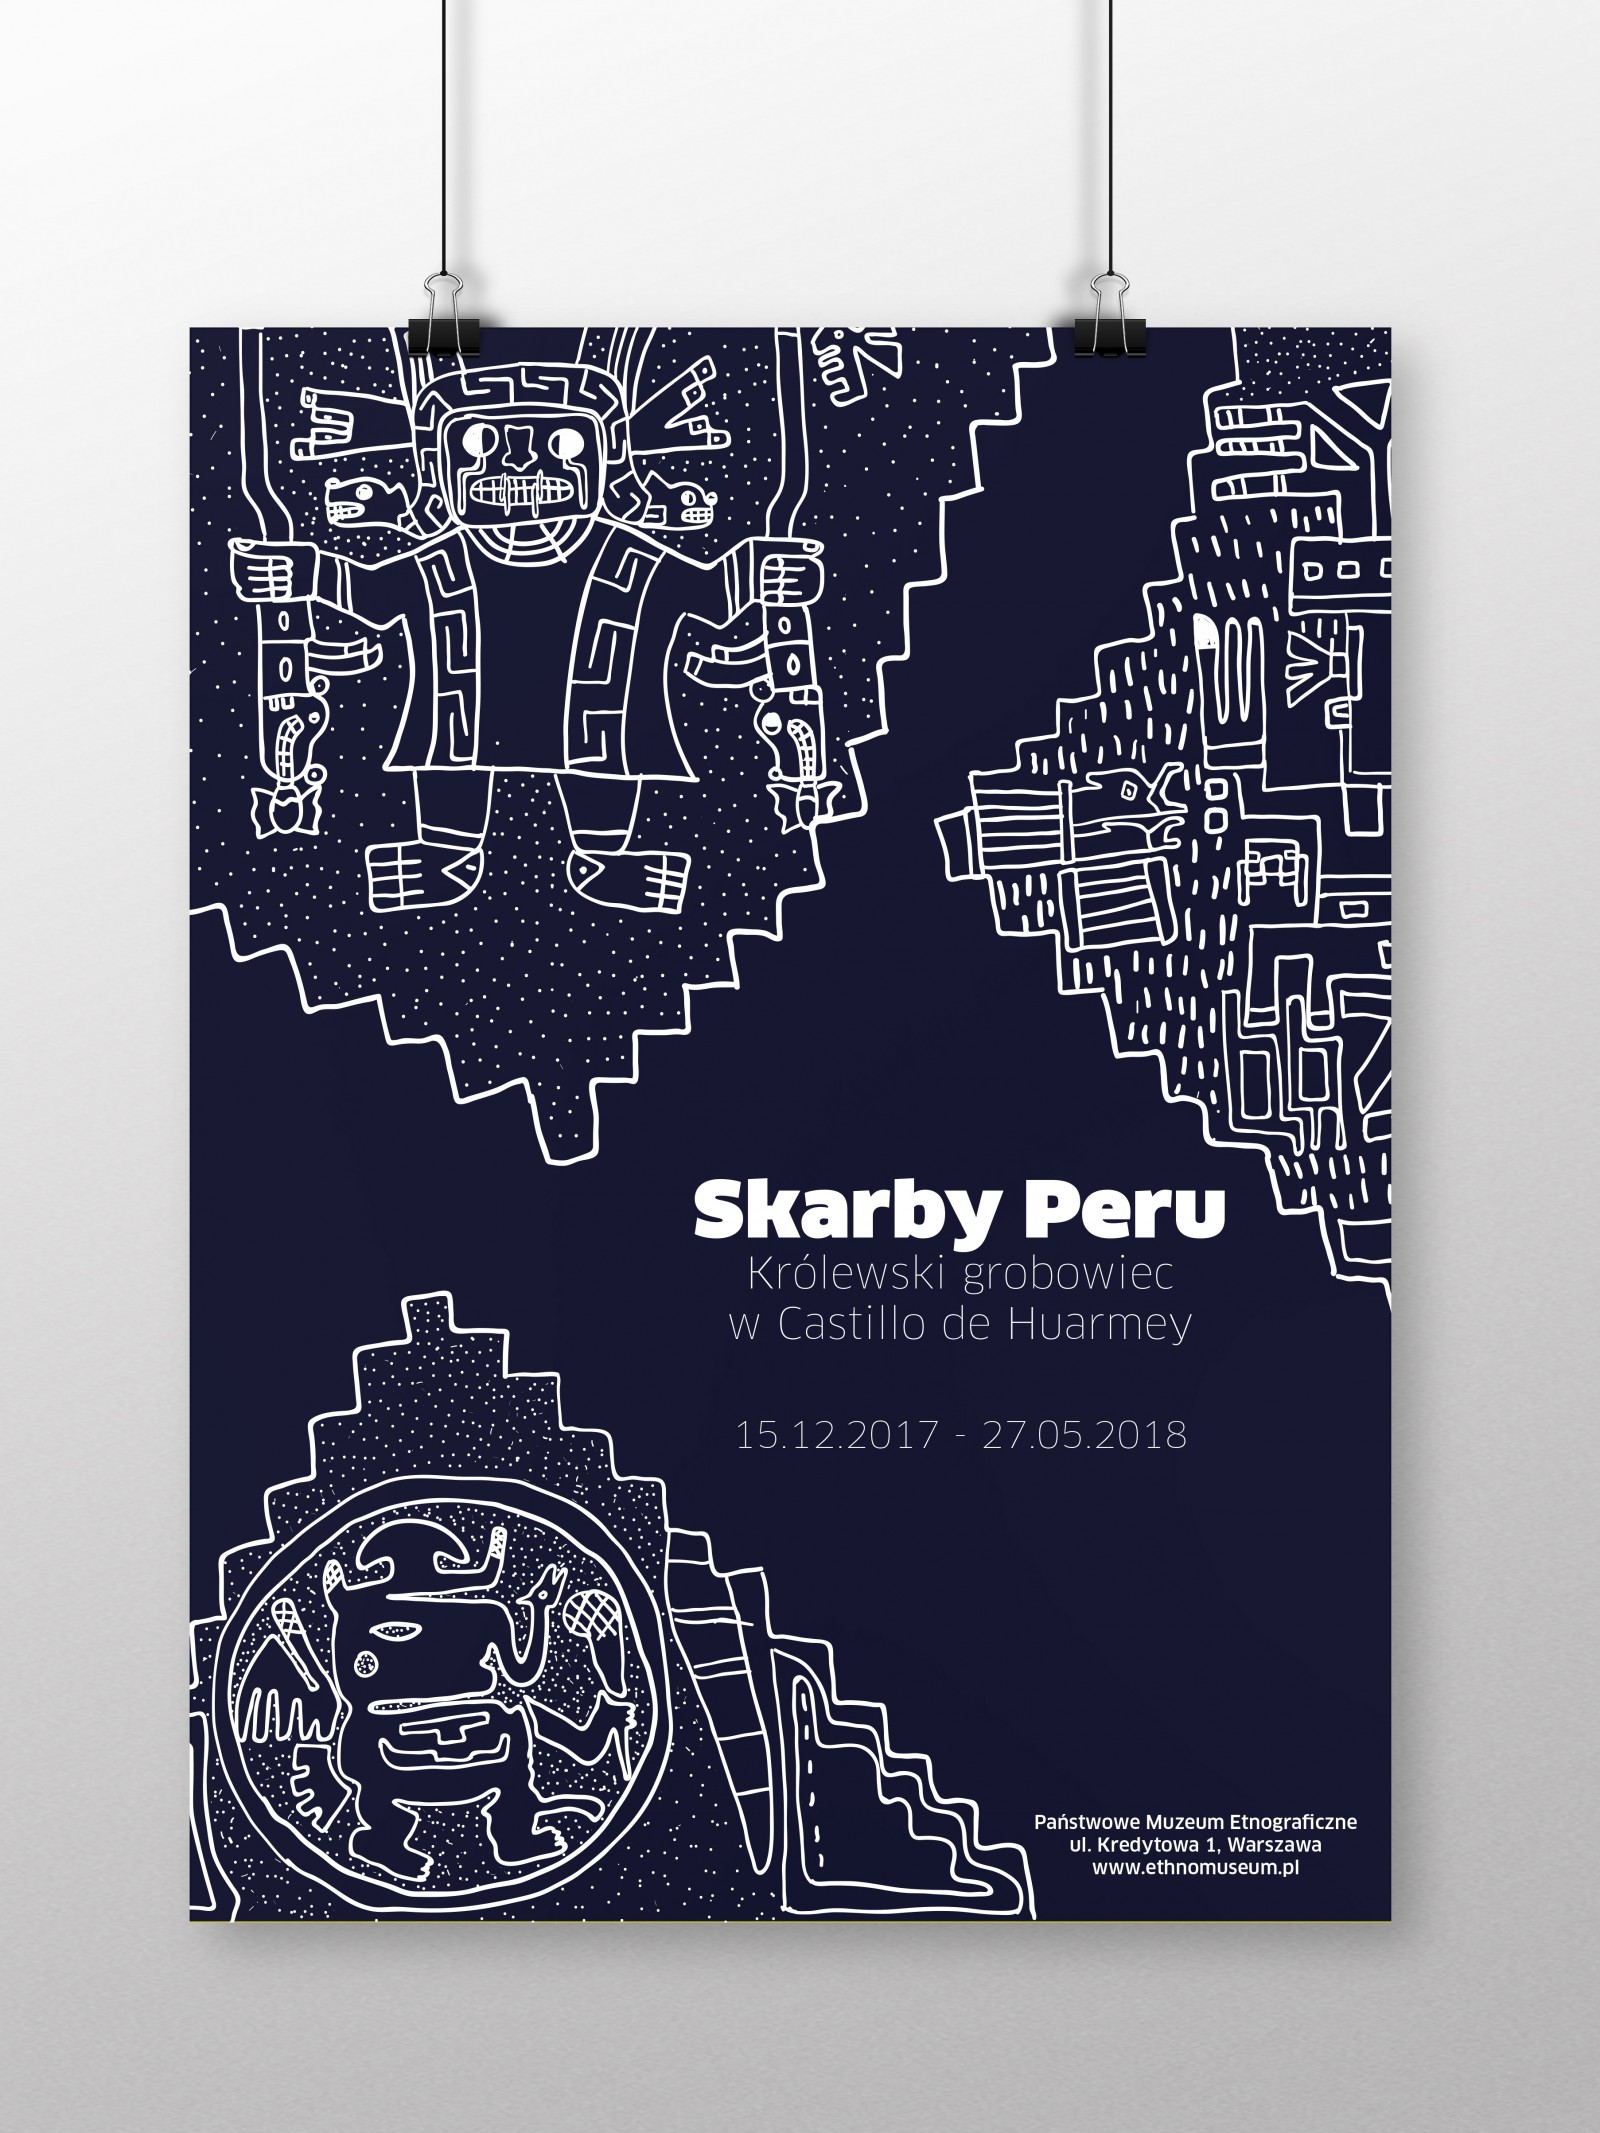 "Skarby Peru"